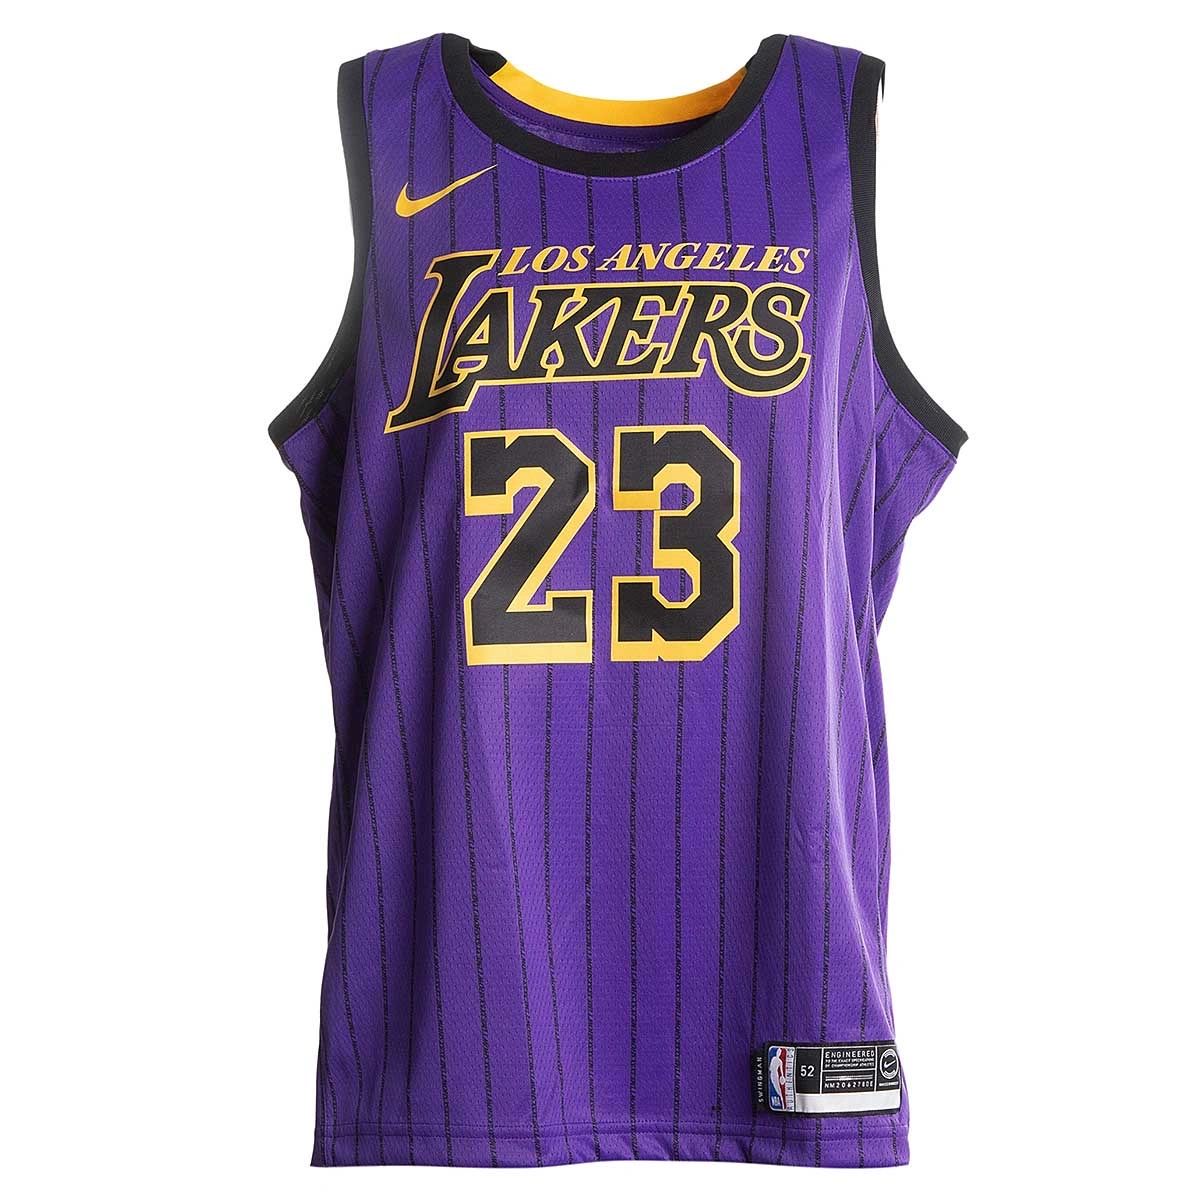 Authentic LeBron James #23 Los Angeles Lakers NBA Jersey (Purple